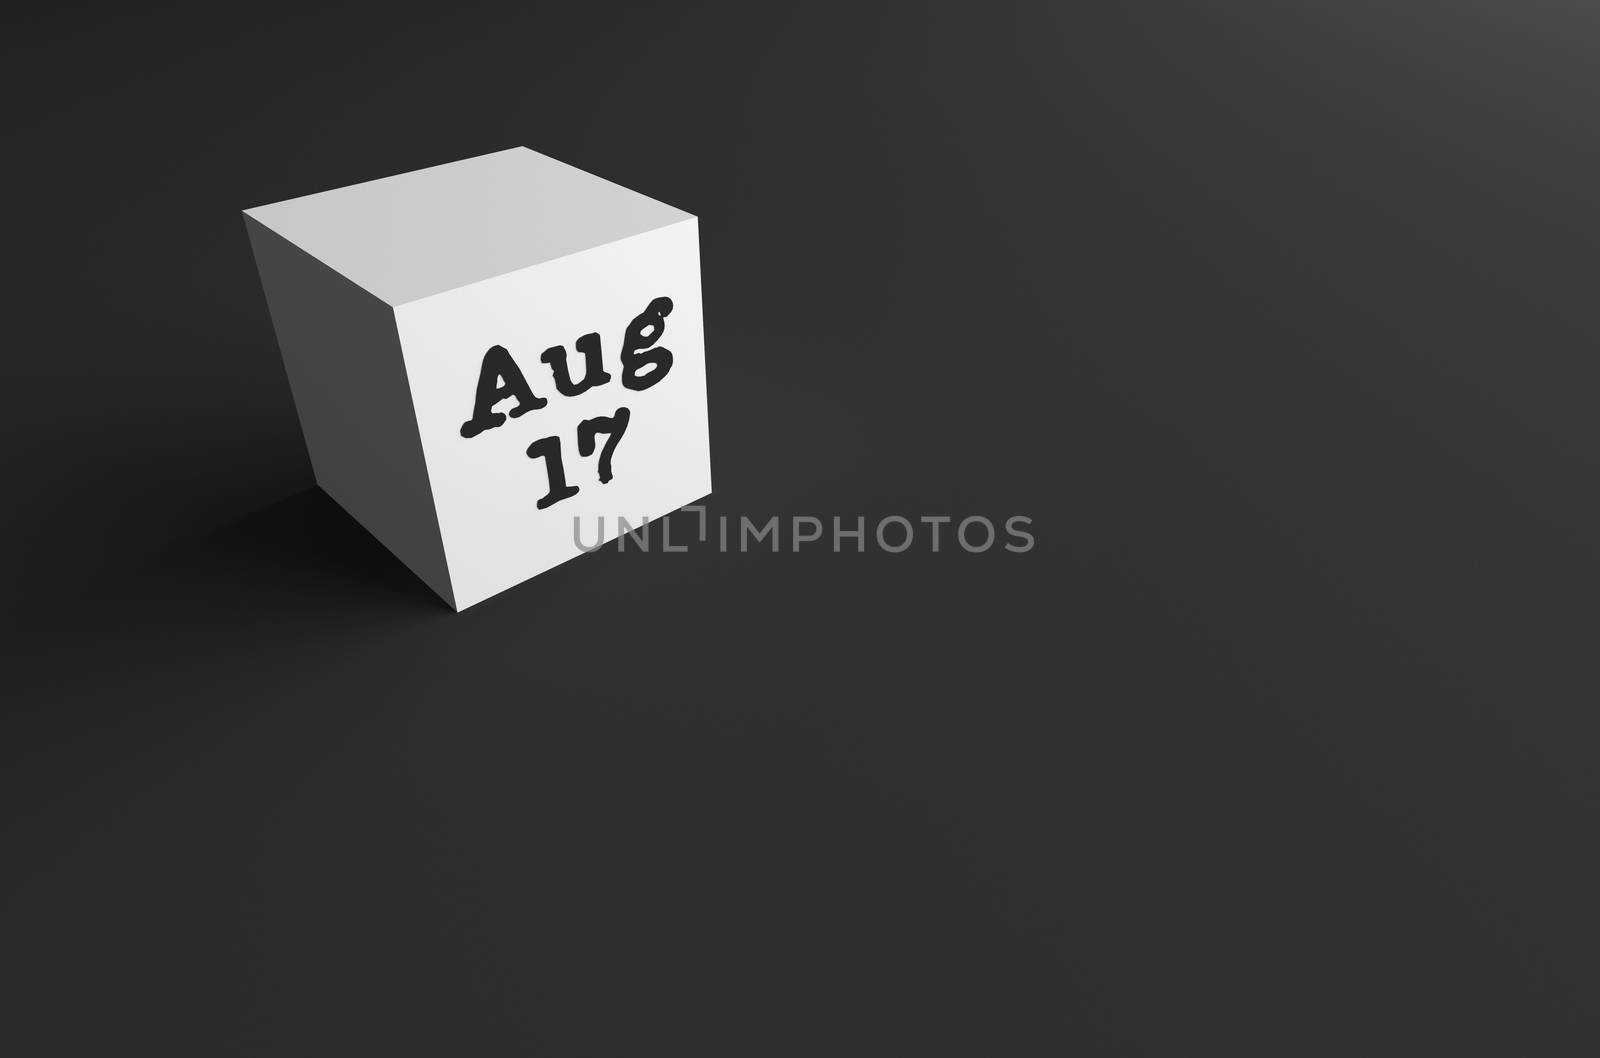 3D RENDERING OF Aug 17 by PrettyTG